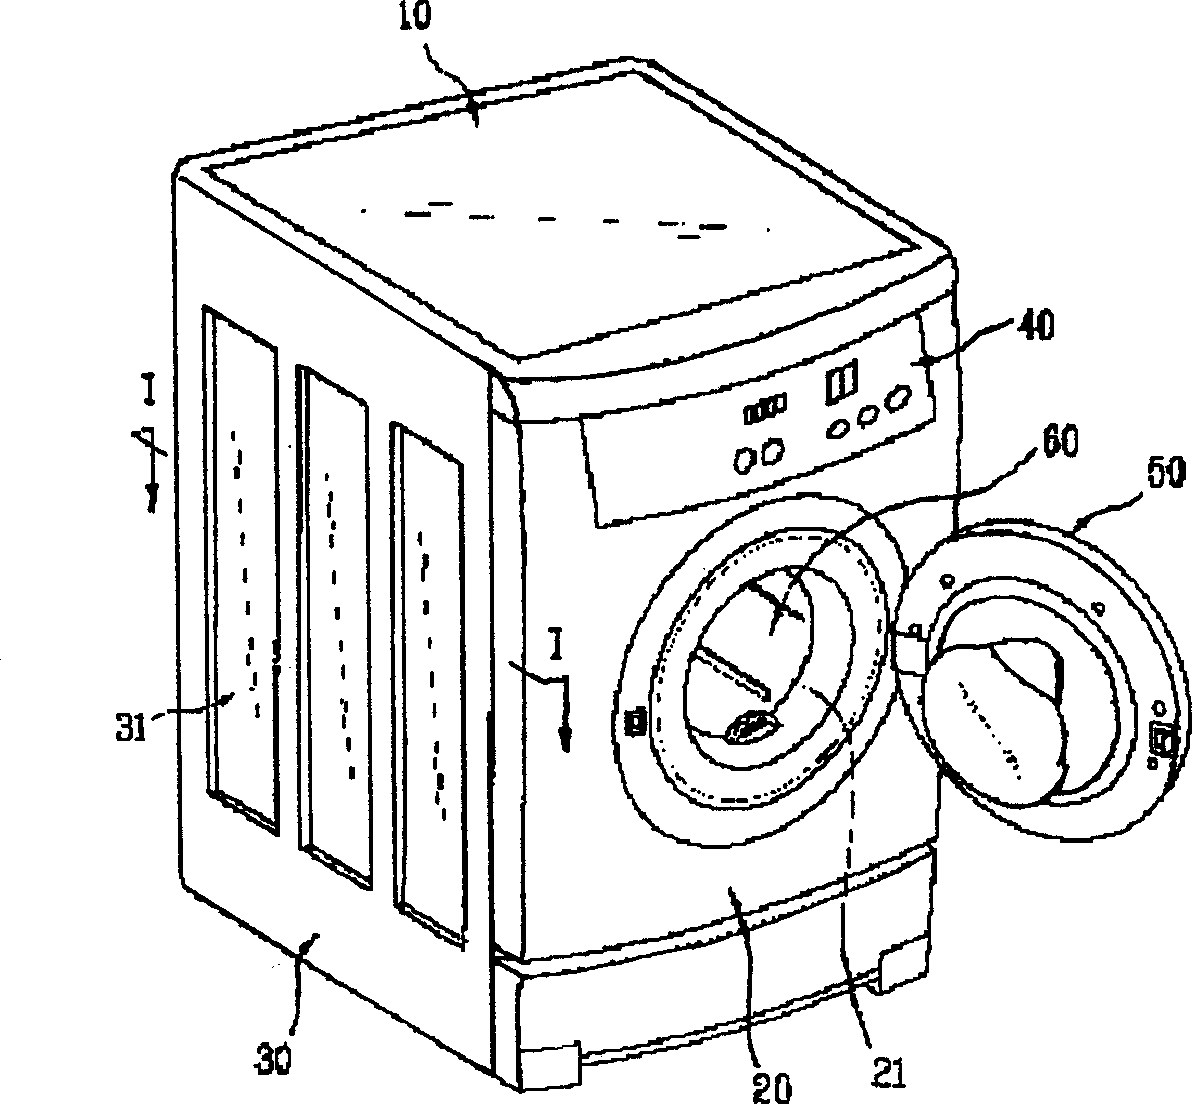 Resonance preventing structure of washing machine